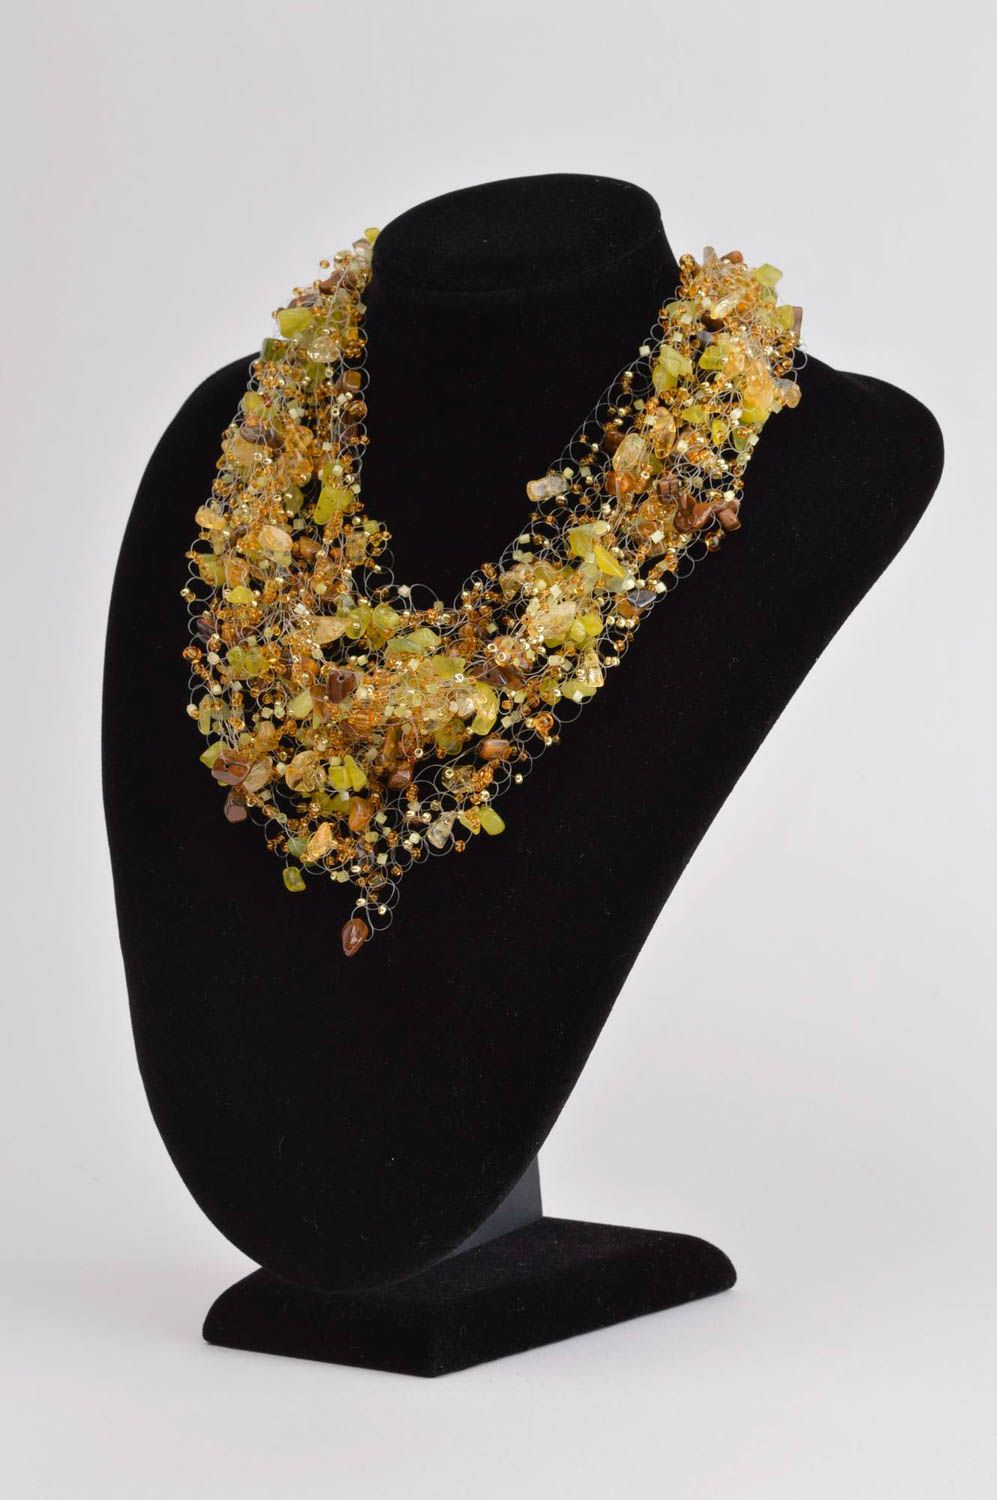 Stylish handmade beaded necklace artisan jewelry neck accessories for girls photo 1